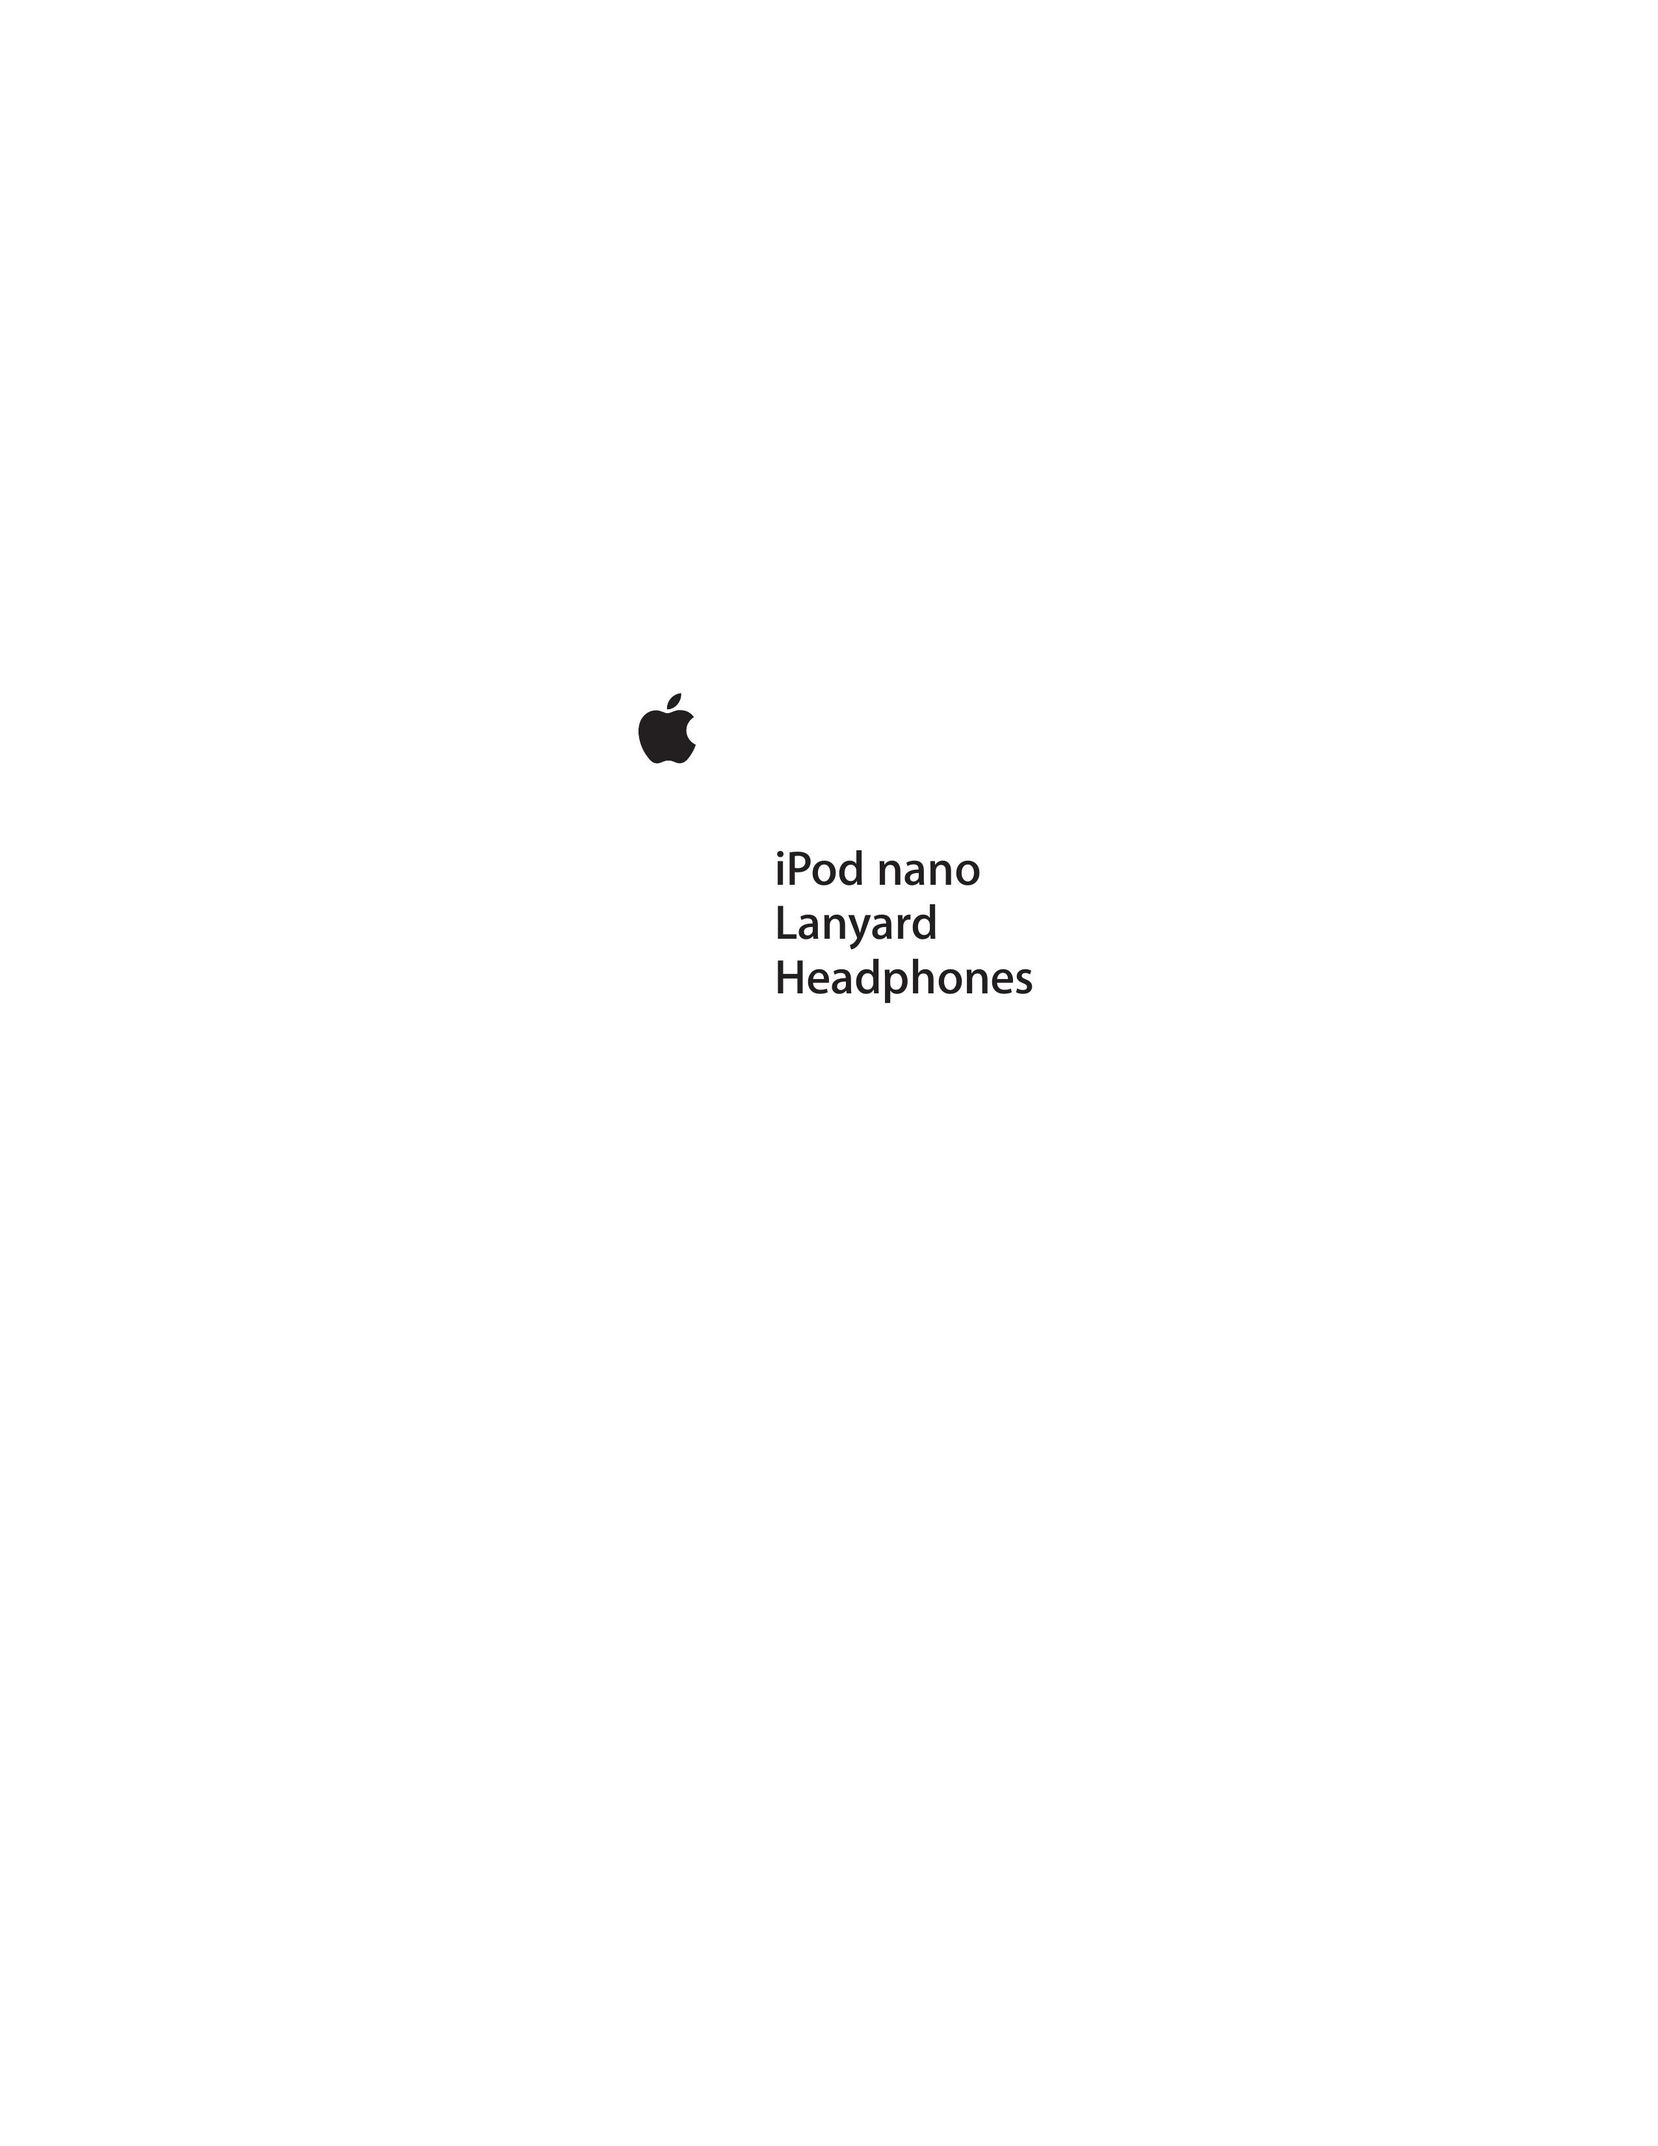 Apple iPod nano Lanyard Headphone Headphones User Manual